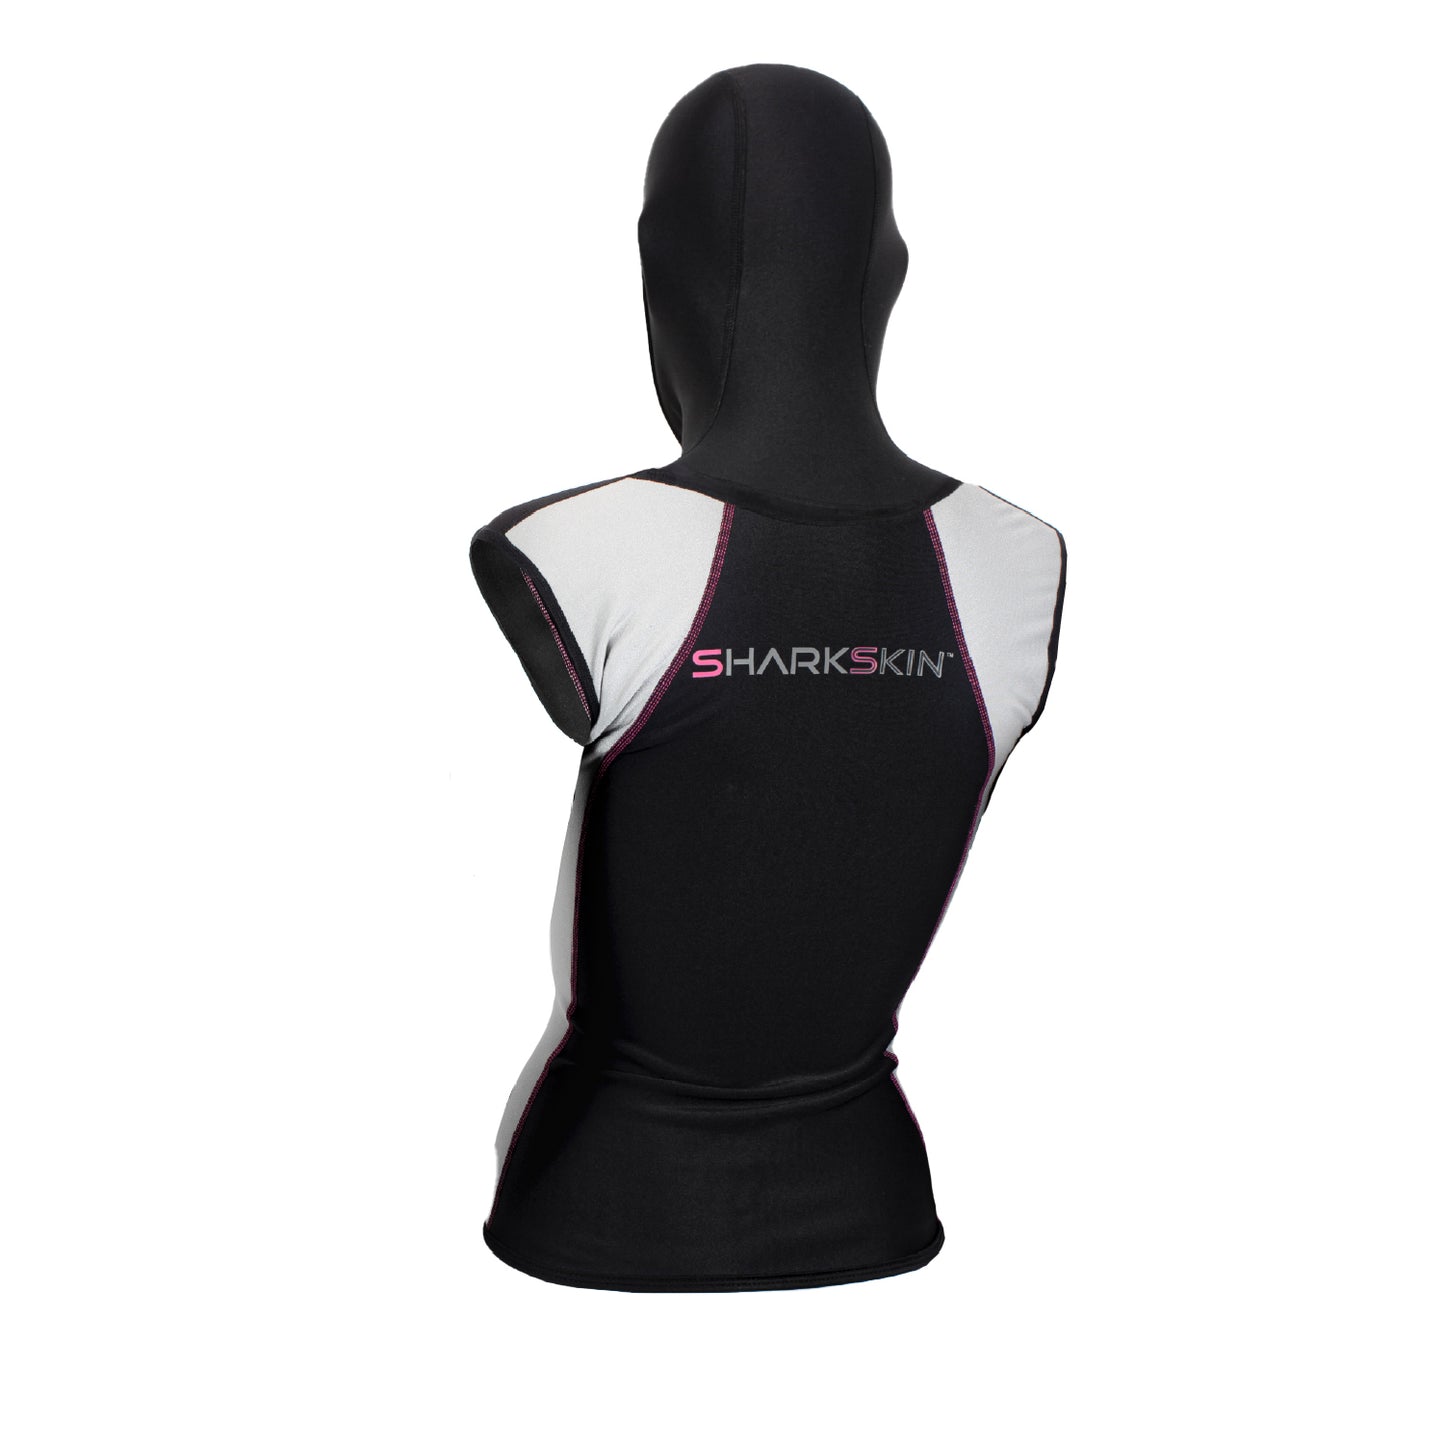 Sharkskin Chillproof Sleeveless Vest with Hood - Women